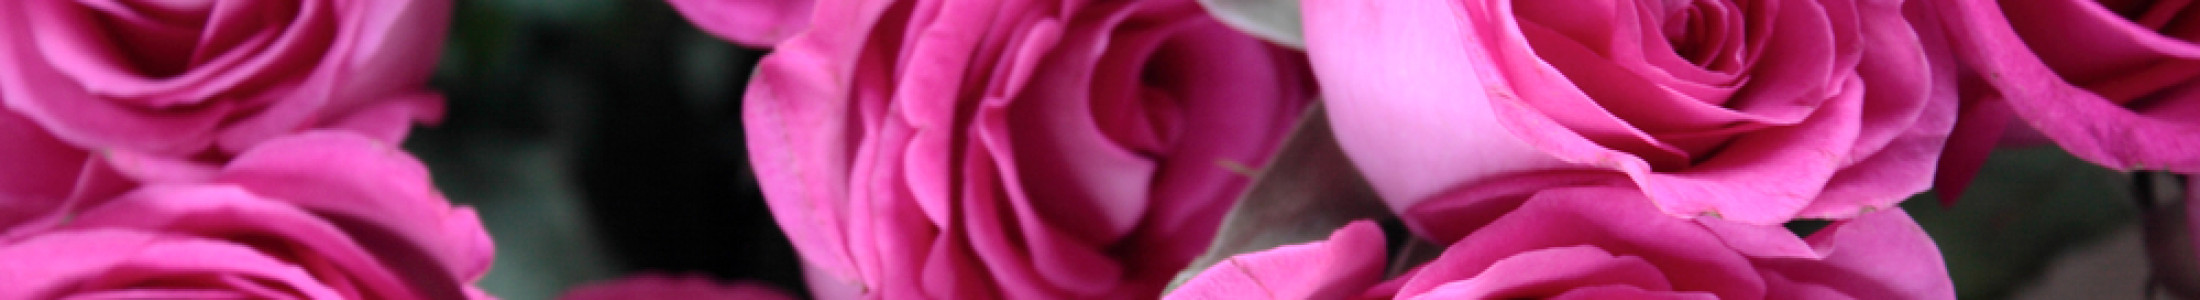 Ecuadorian Roses, Long Stem Roses, Spray Roses